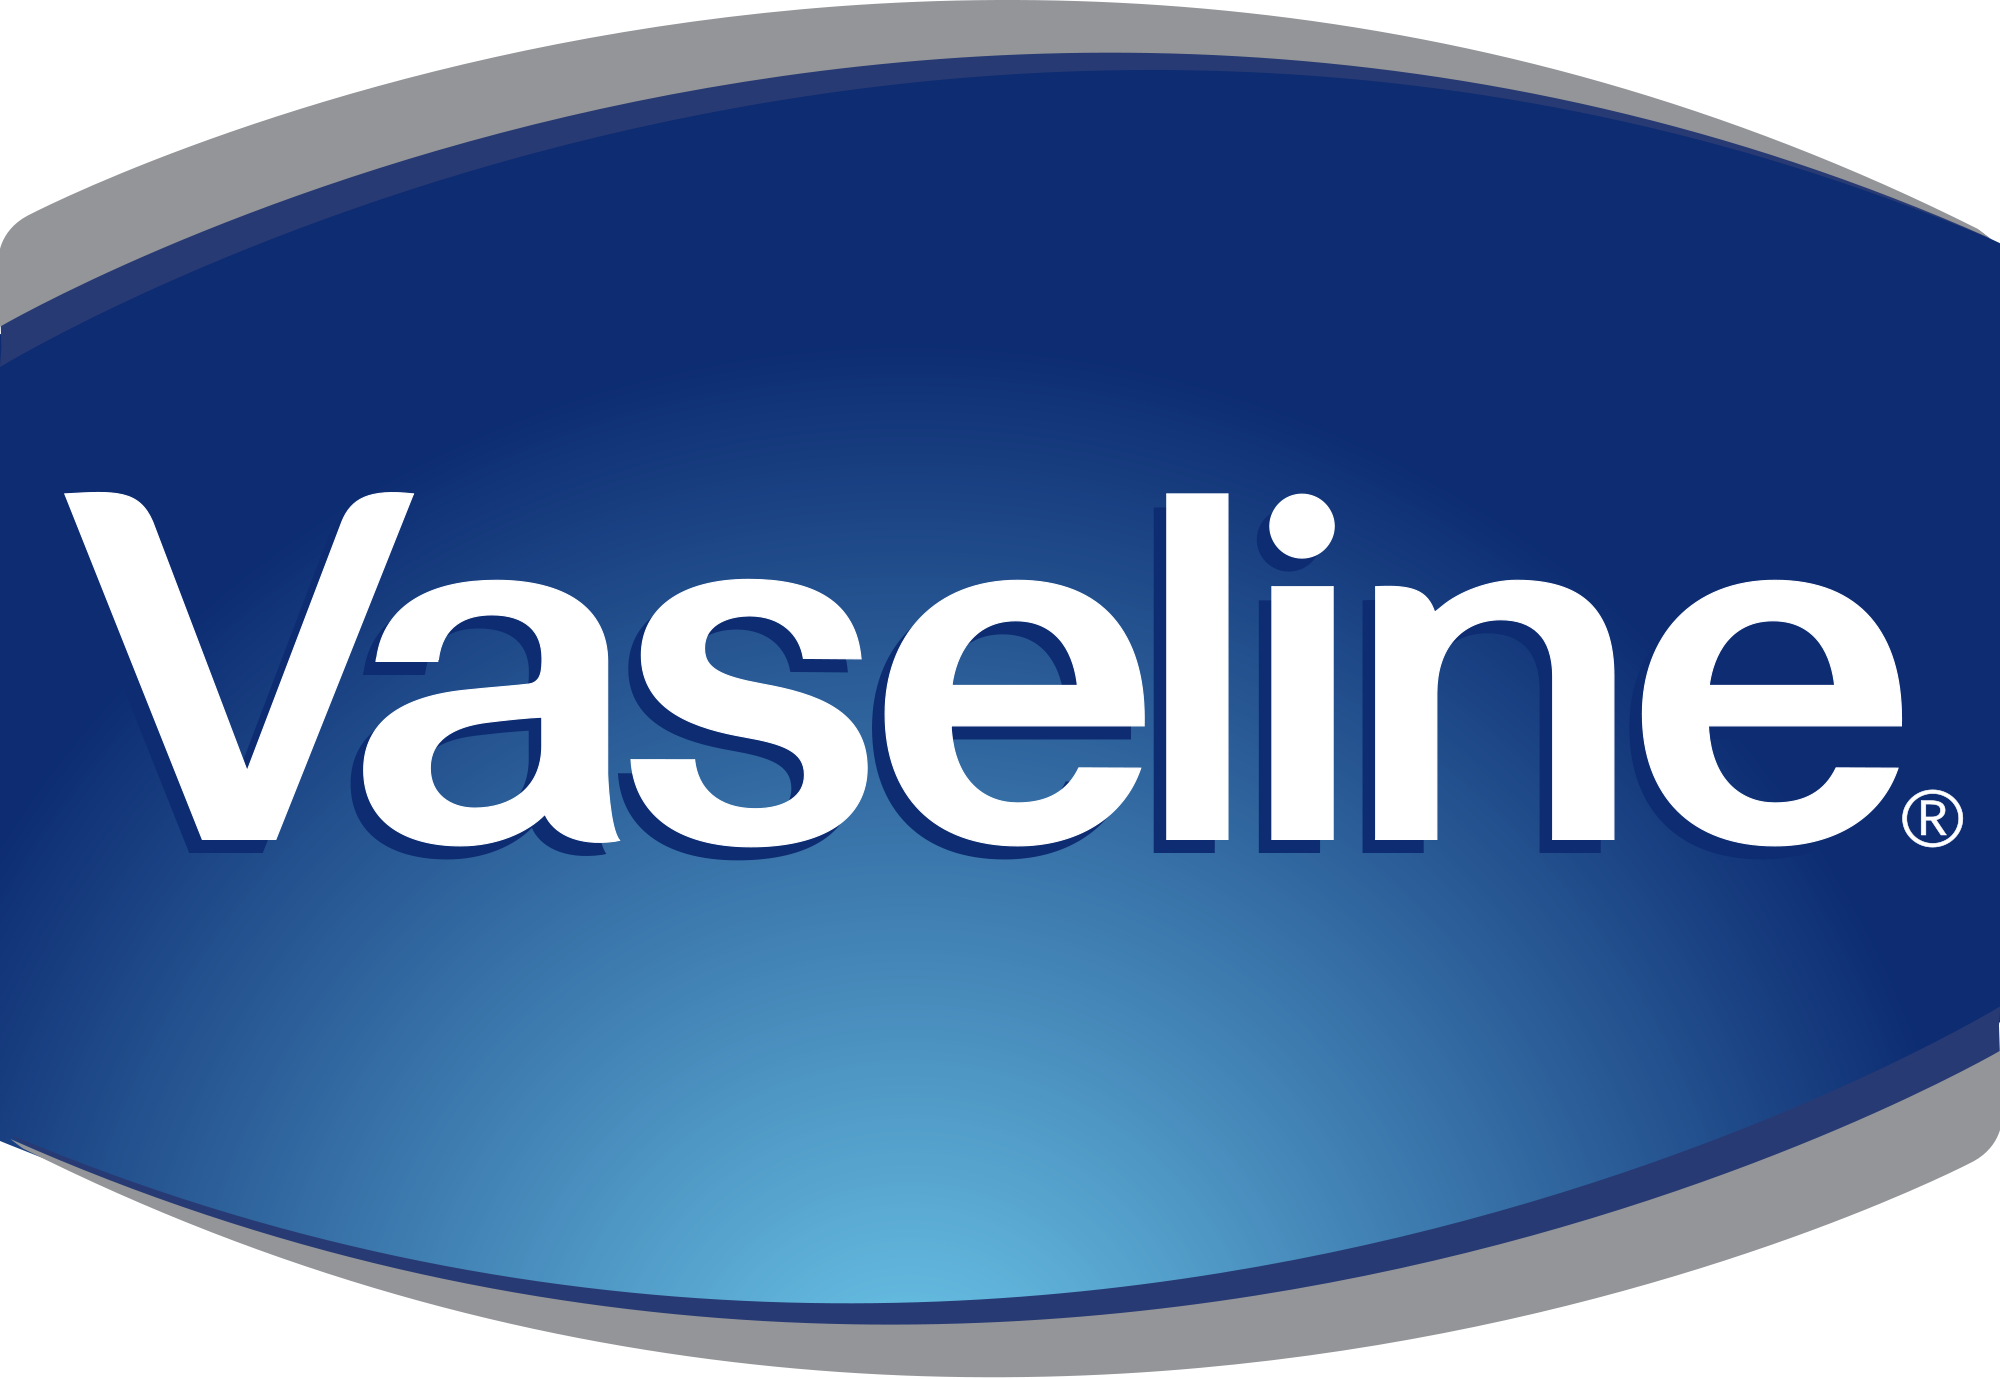 Vaseline Logo photo - 1